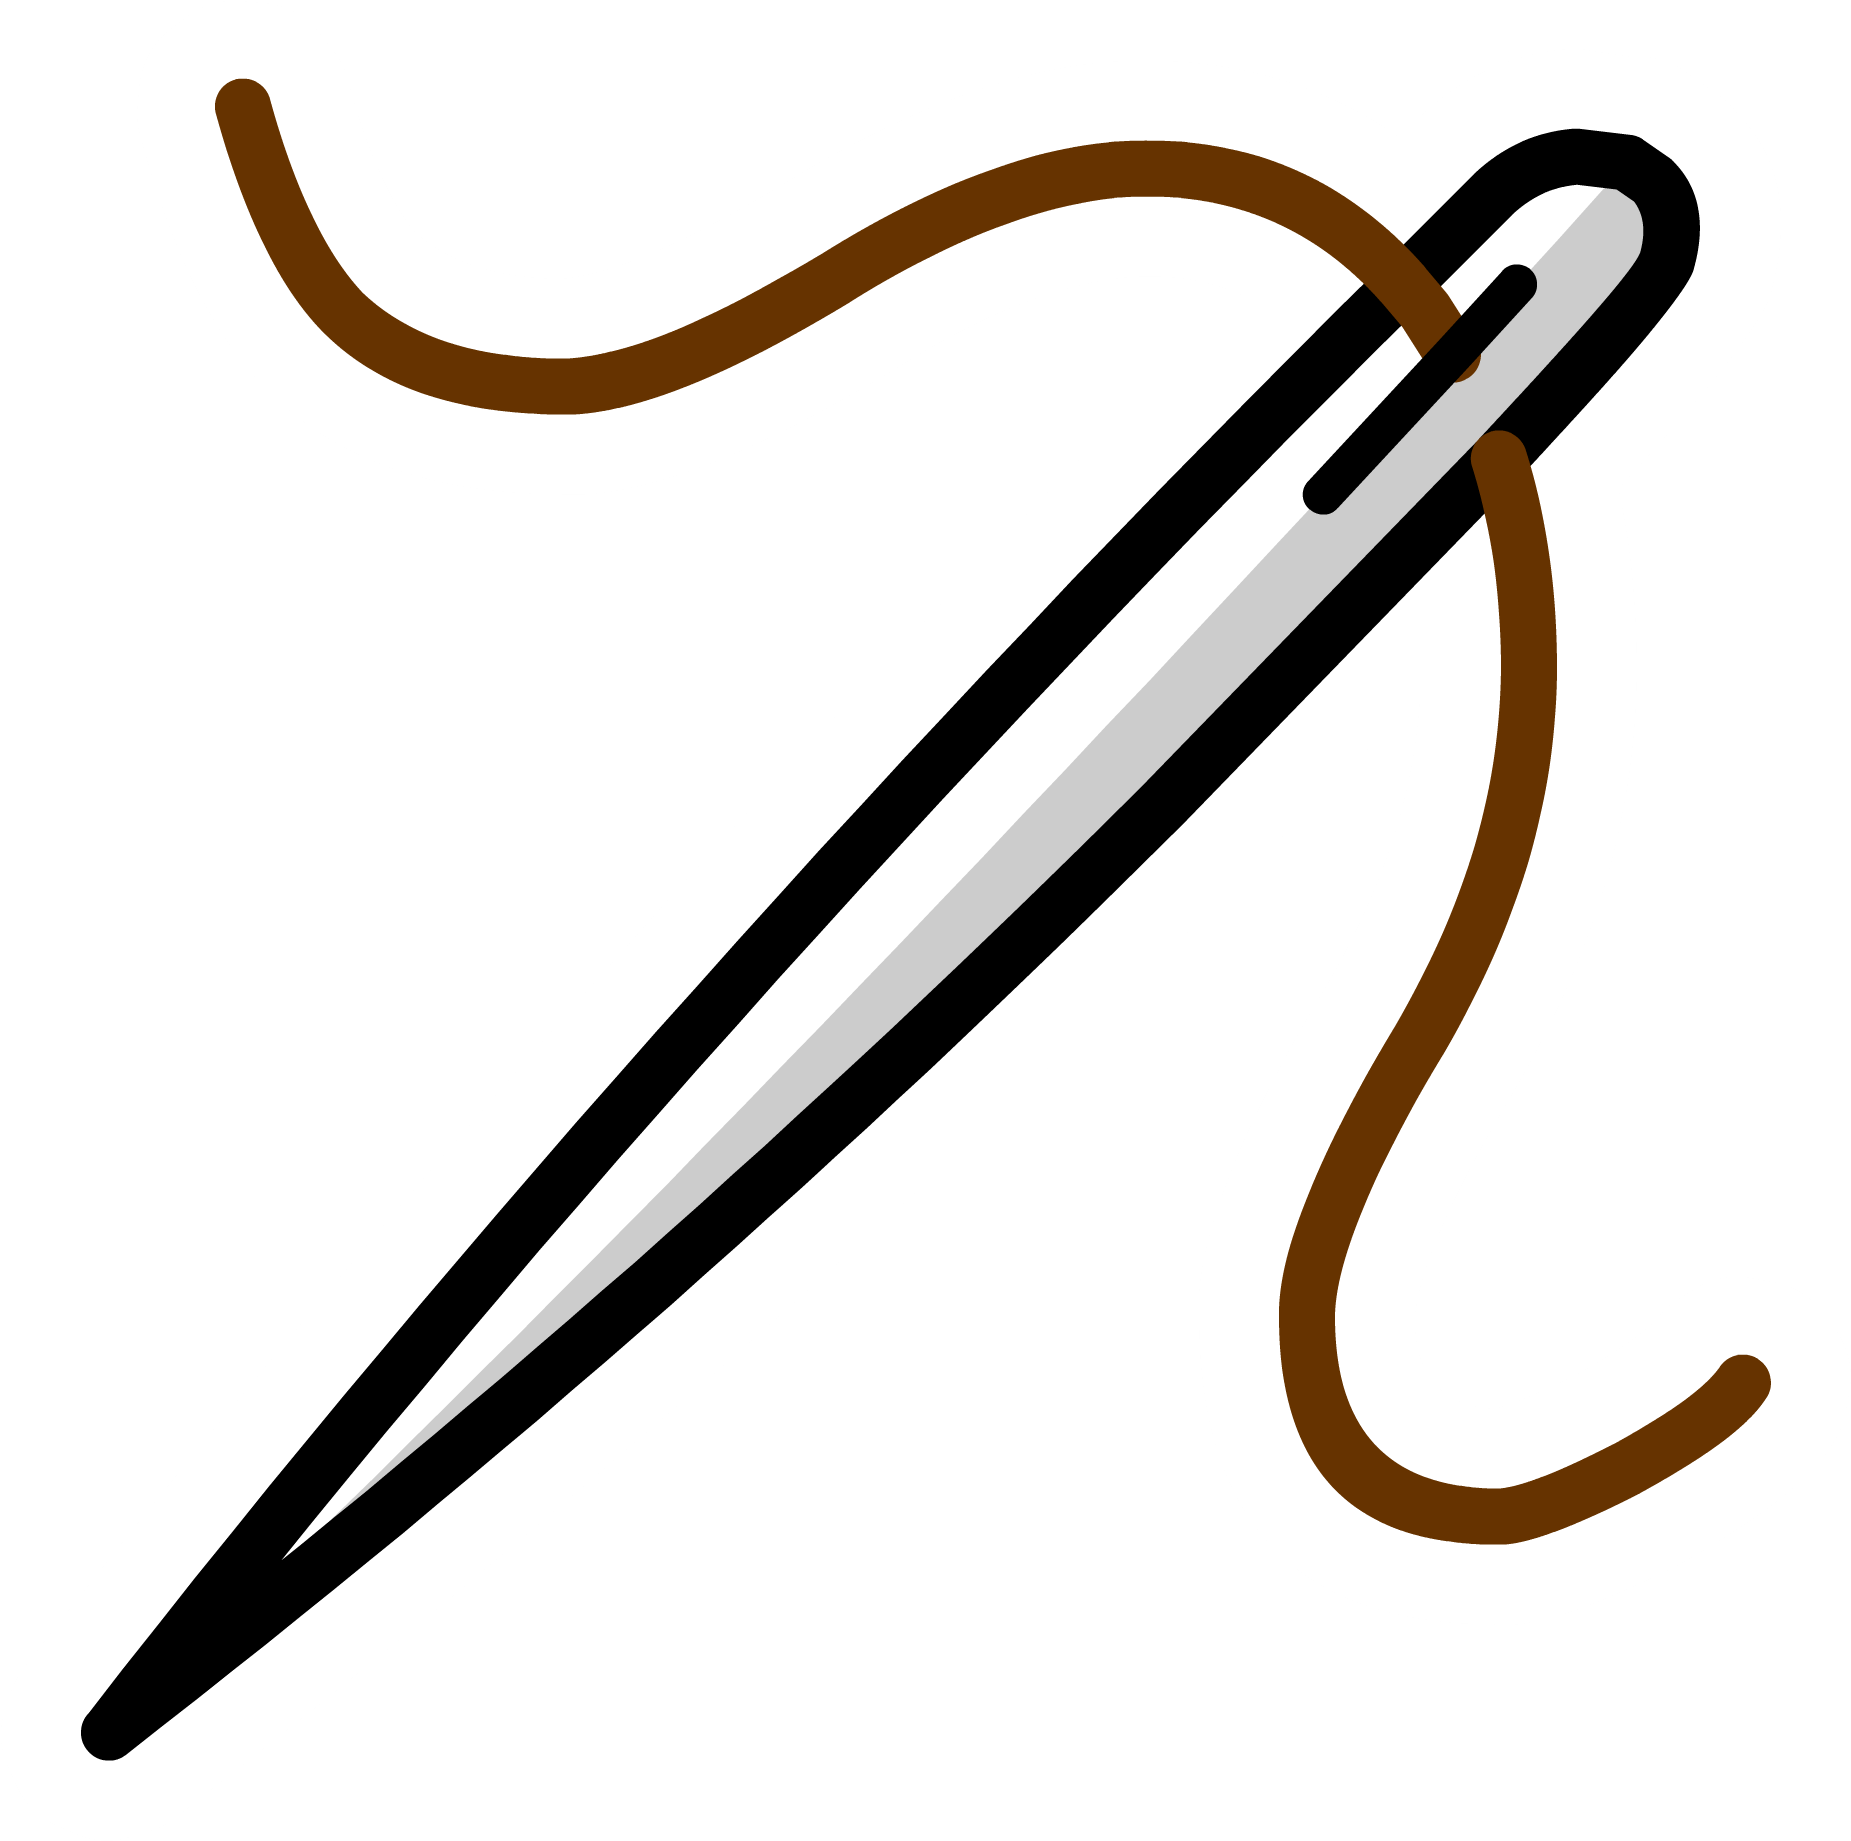 Needle pin | Club Penguin Wiki | FANDOM powered by Wikia